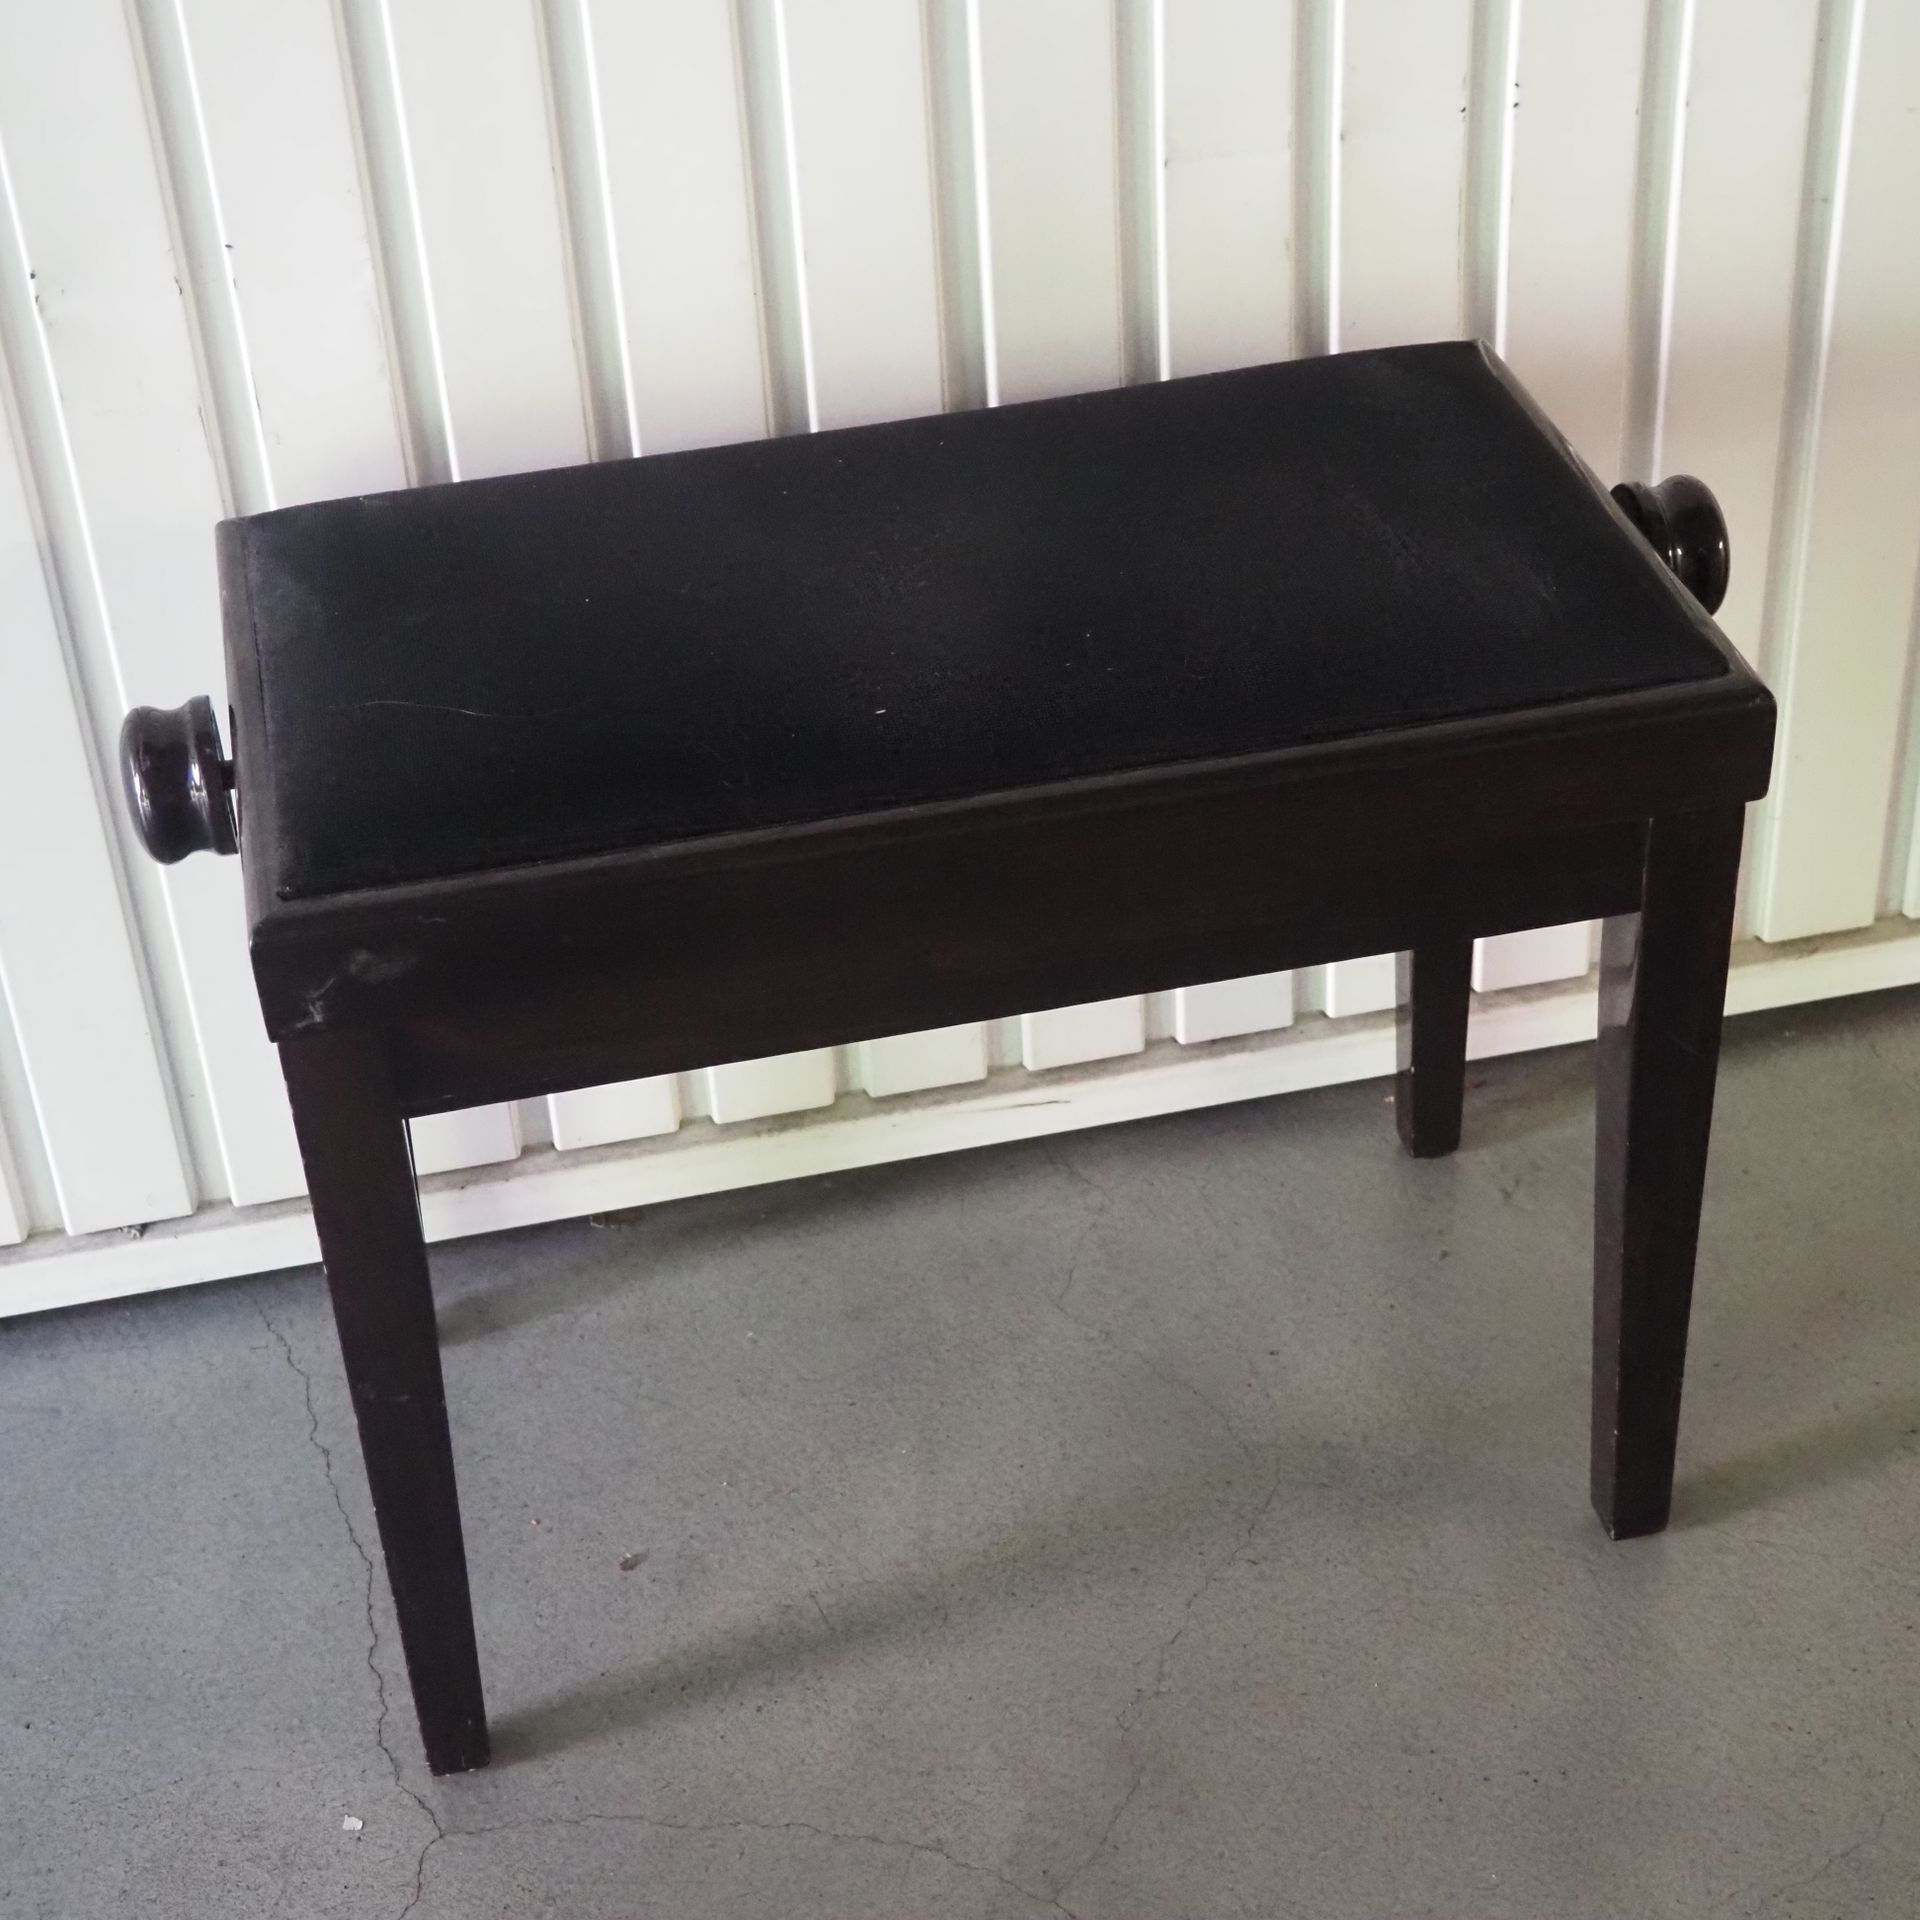 Tabouret de piano vers 1970 钢琴凳（约1970年）：实心桃花心木，清漆，座垫为黑色天鹅绒，高度可调，高：46，宽：58，深：33厘米